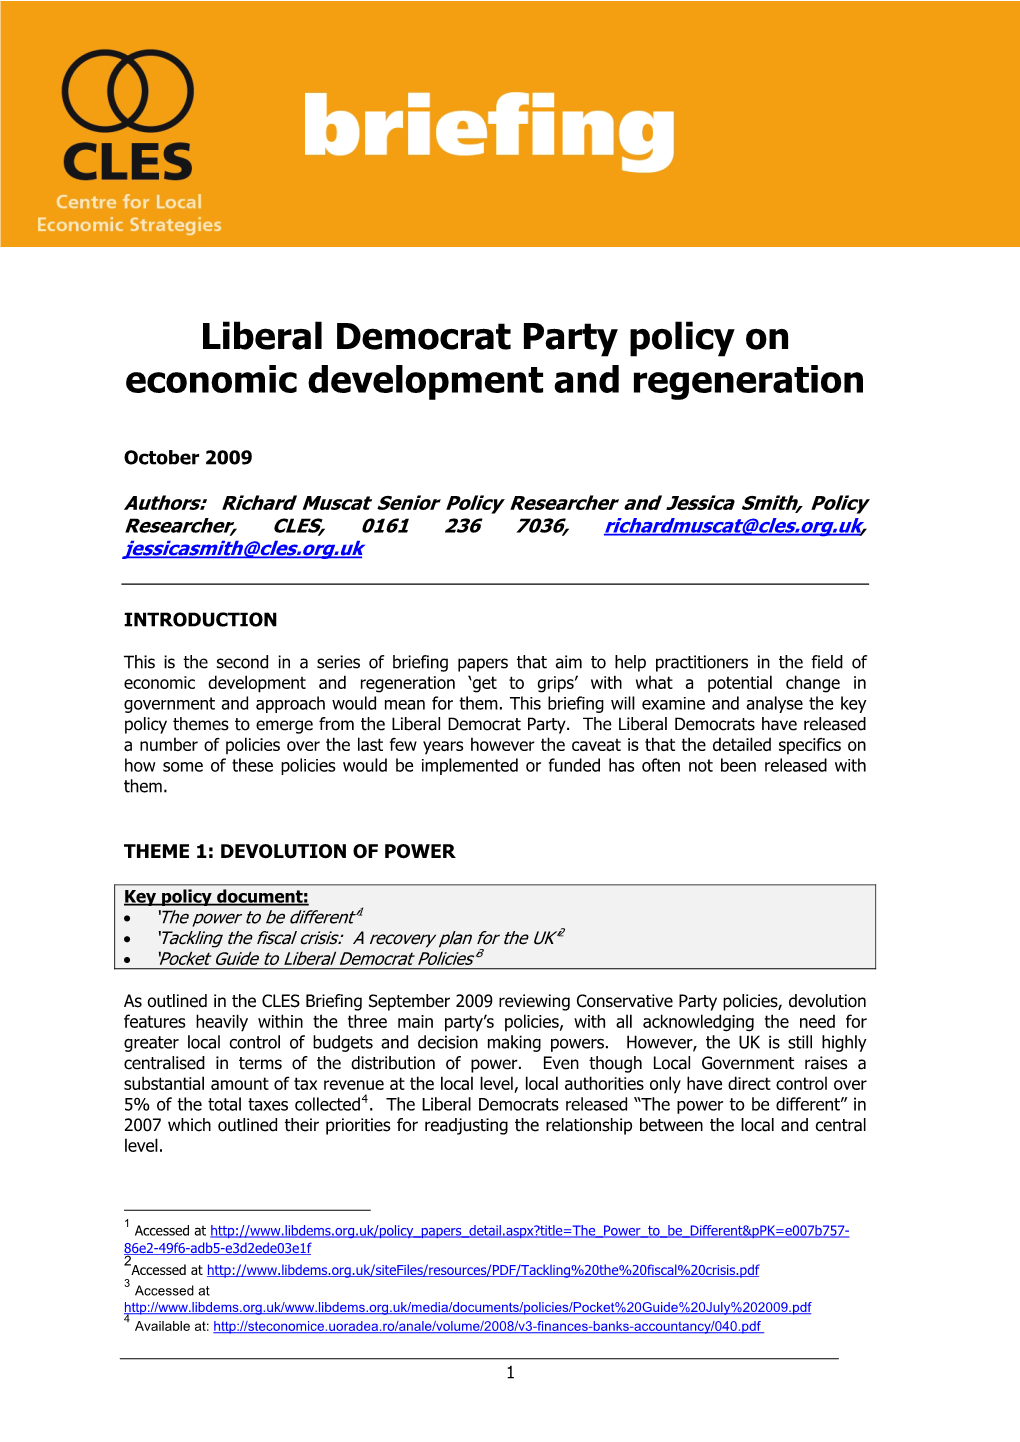 Liberal Democrat Party Policy on Economic Development and Regeneration